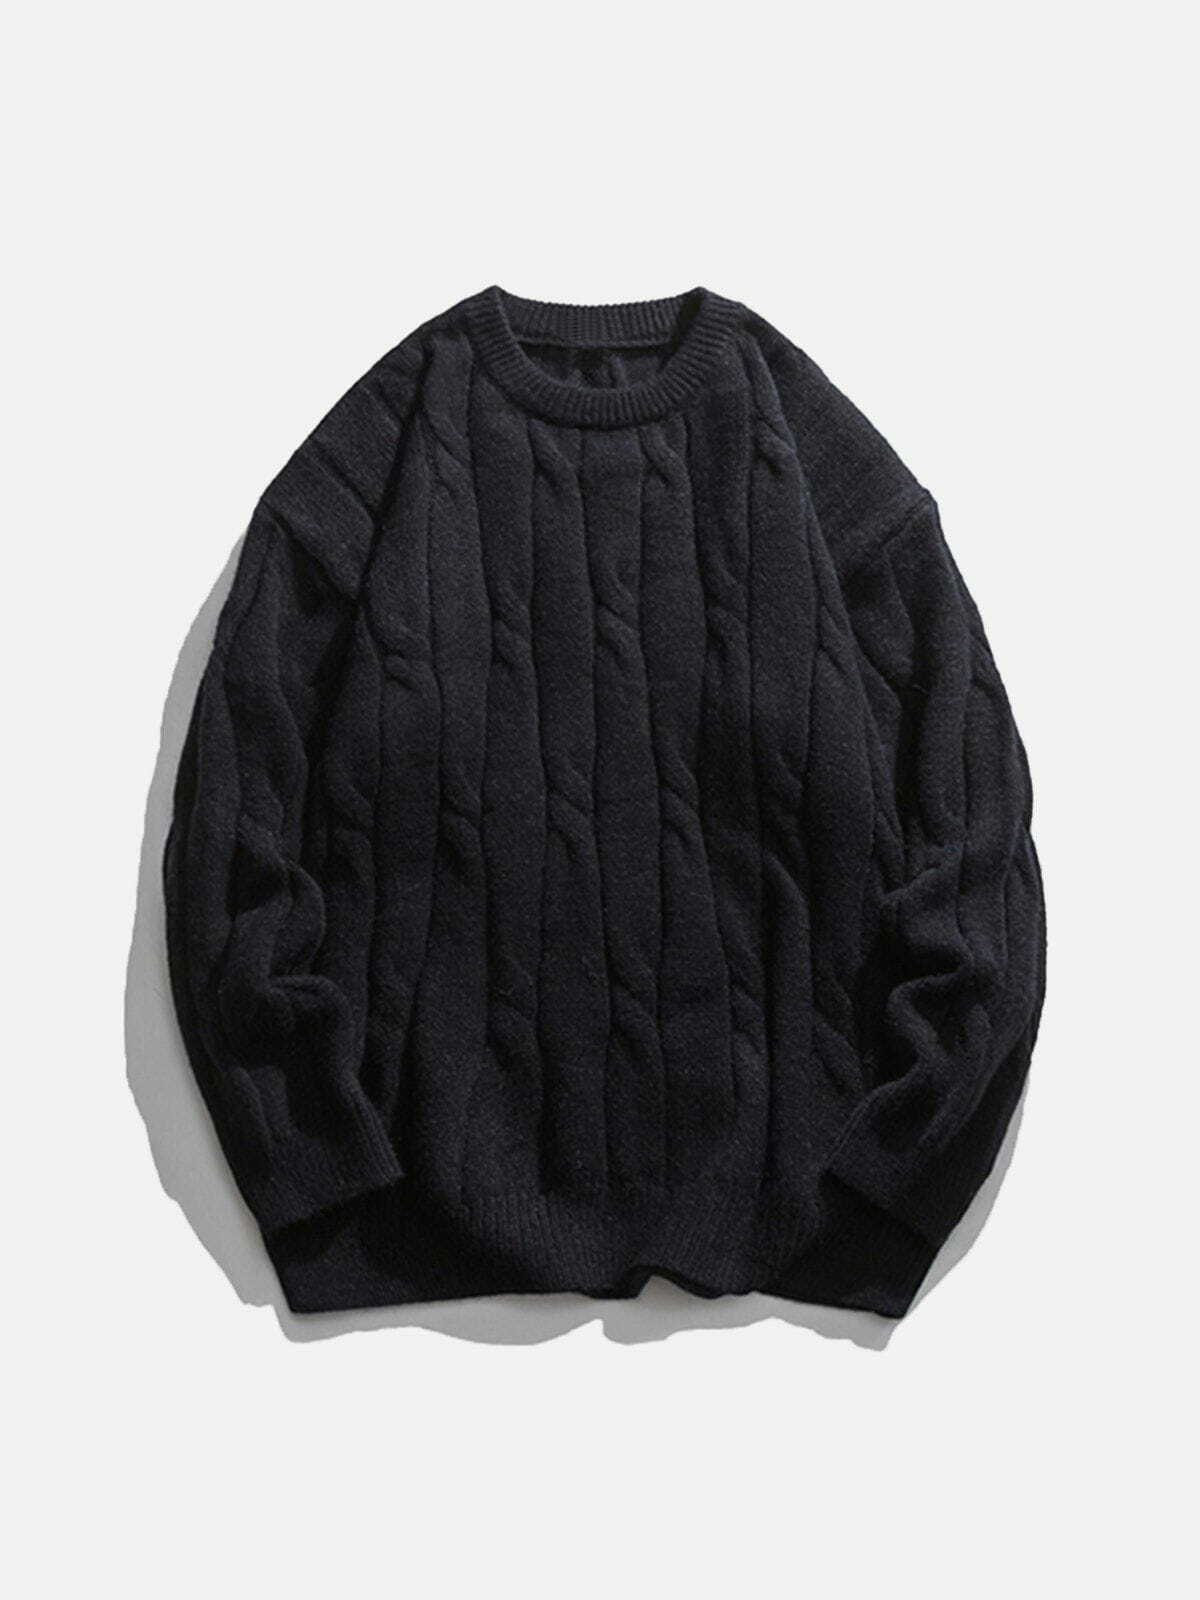 vibrant woven sweater bold & chic streetwear 5357